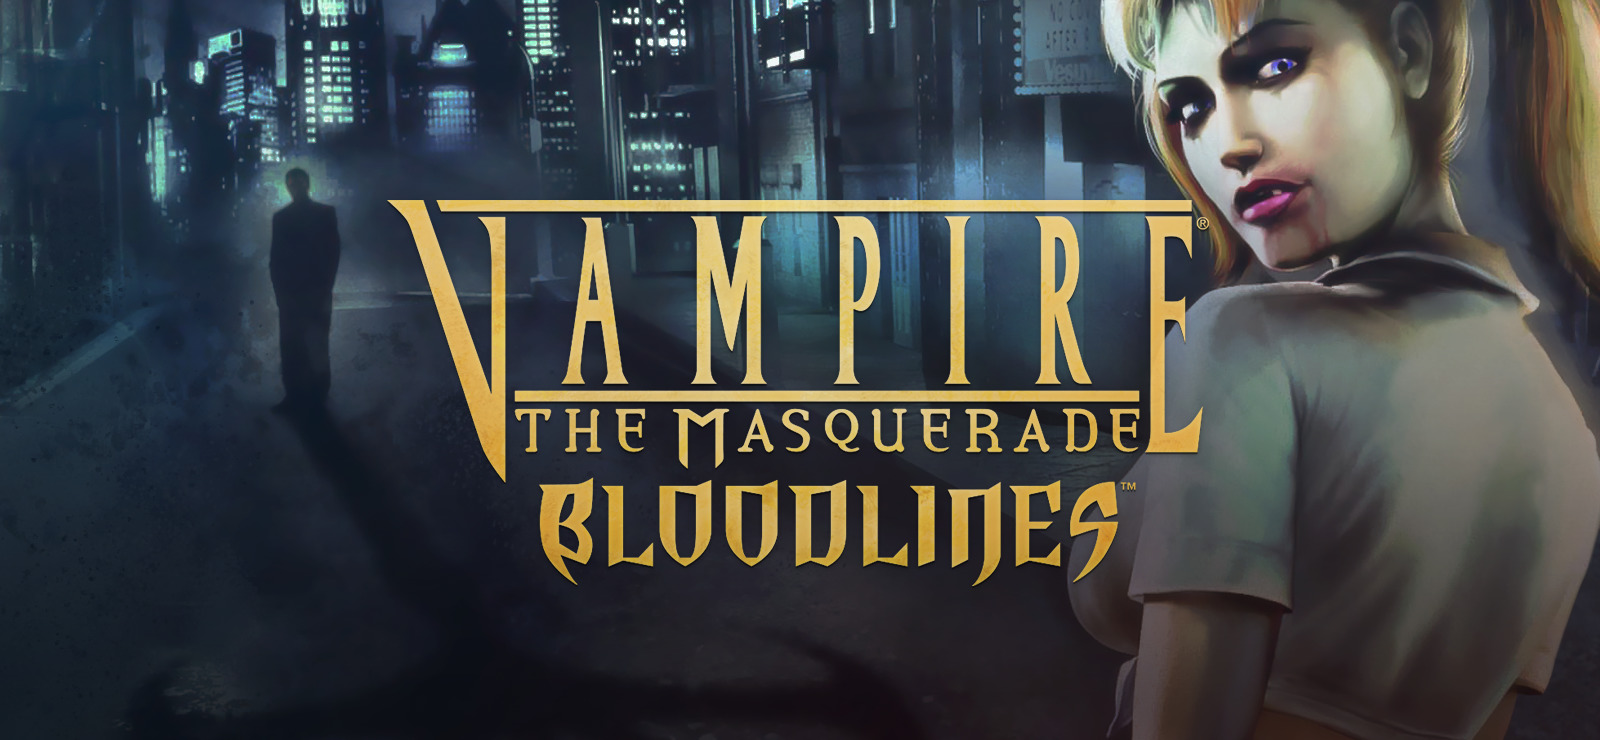 vampire the masquerade free